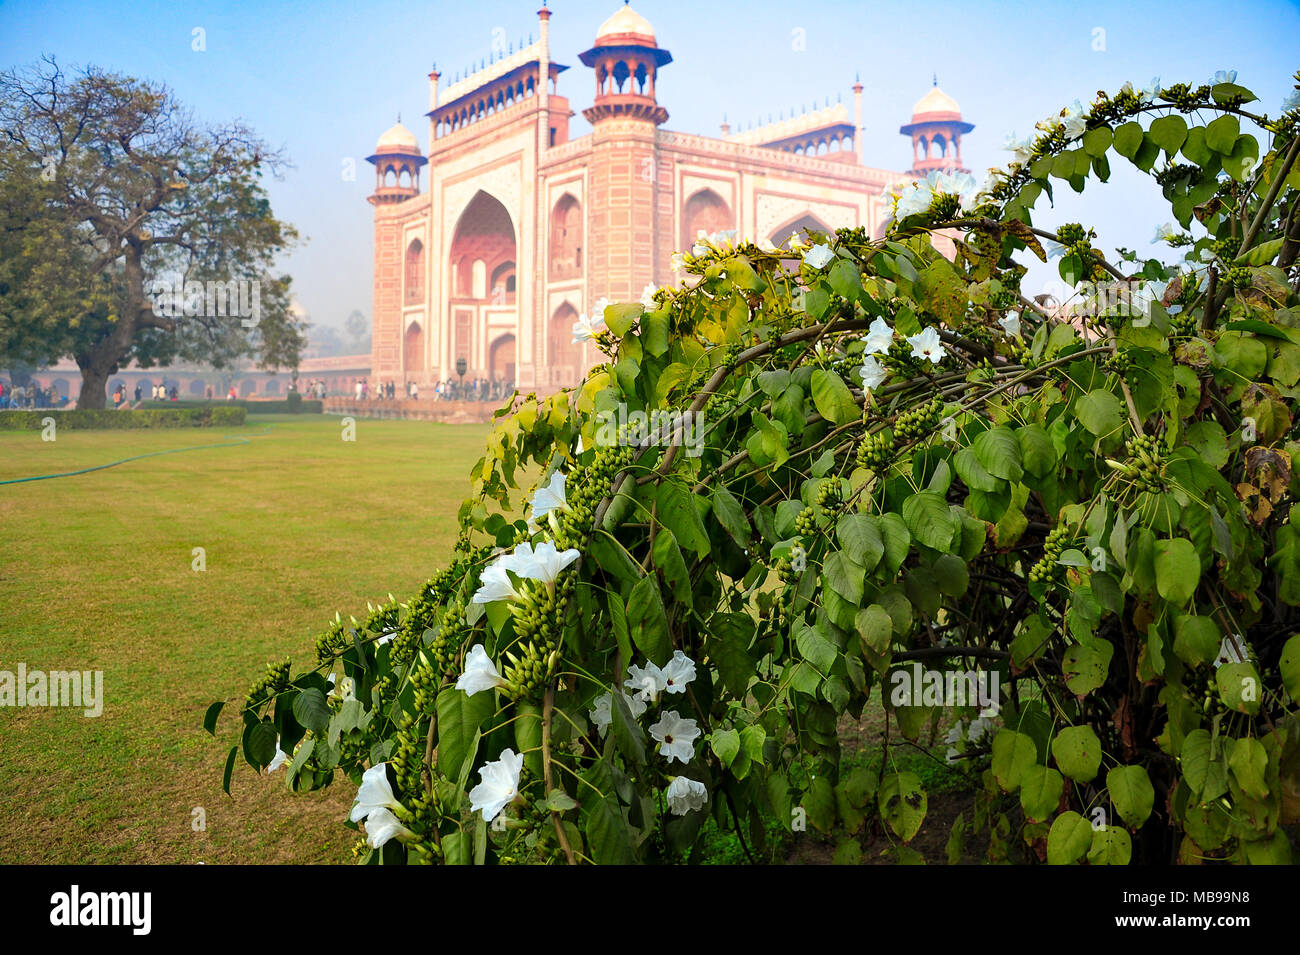 Thunbergia grandiflora (Bengal Clock Vine) at the Great Gate (Darwaza-i-rauza) of the Taj Mahal. Green creeper, white flowers, red building, blue sky Stock Photo